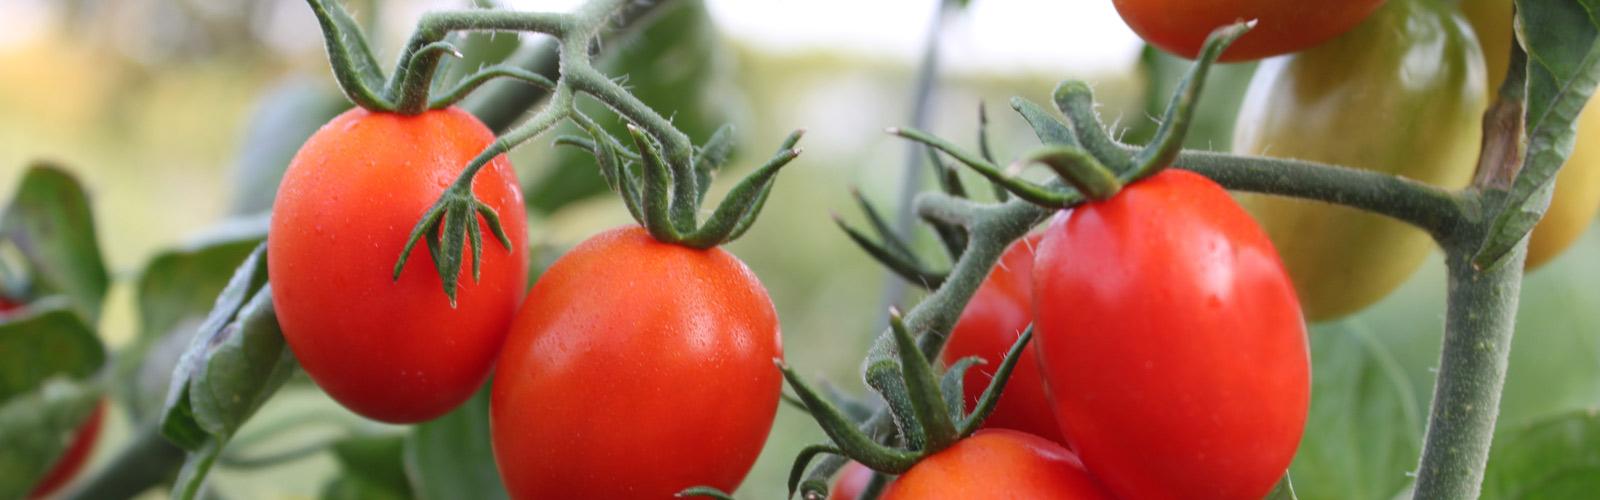 Tomato Grafting - Wortman Research 